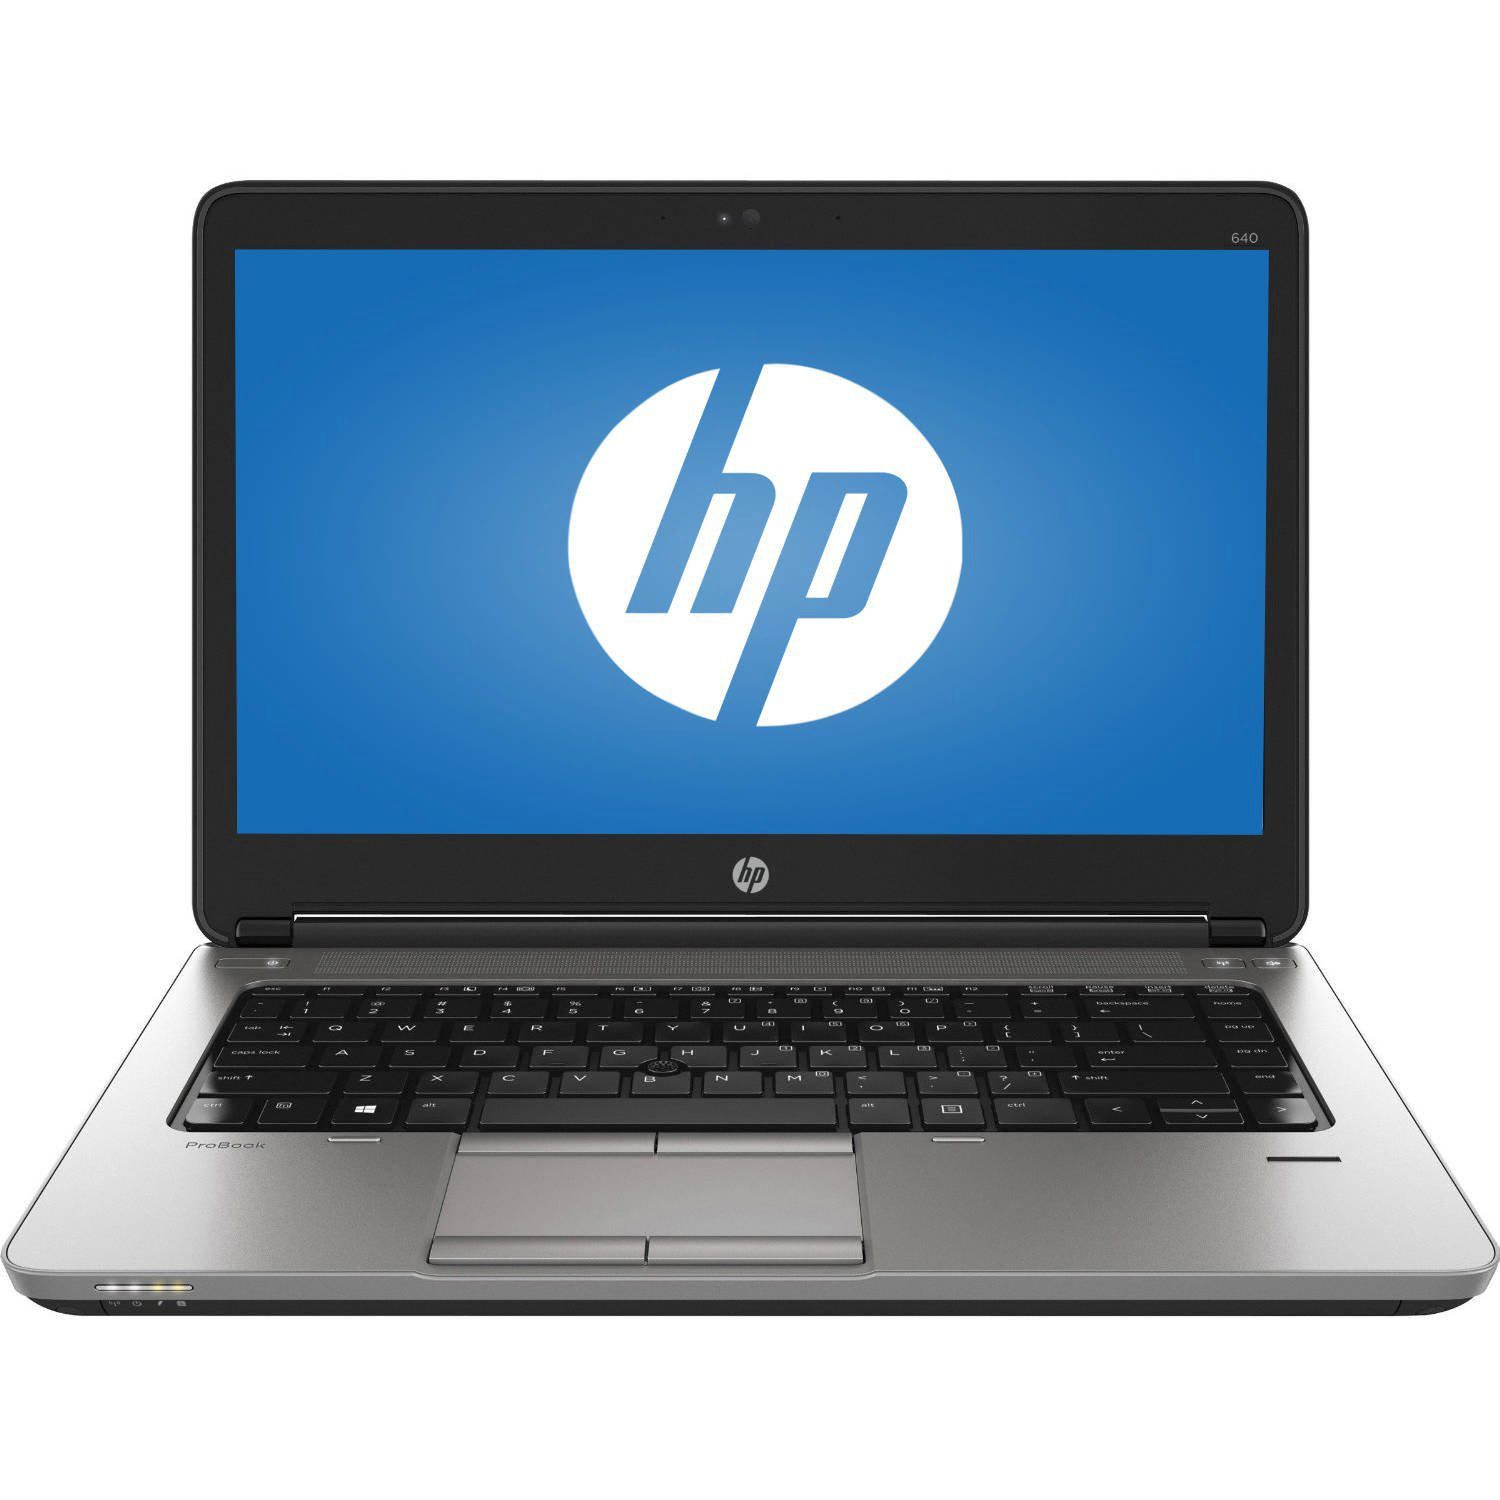 Refurbished Hp Probook 640 G1 14” Laptop With Intel Core I5 4300m 26 Ghz Processor Walmart 3025